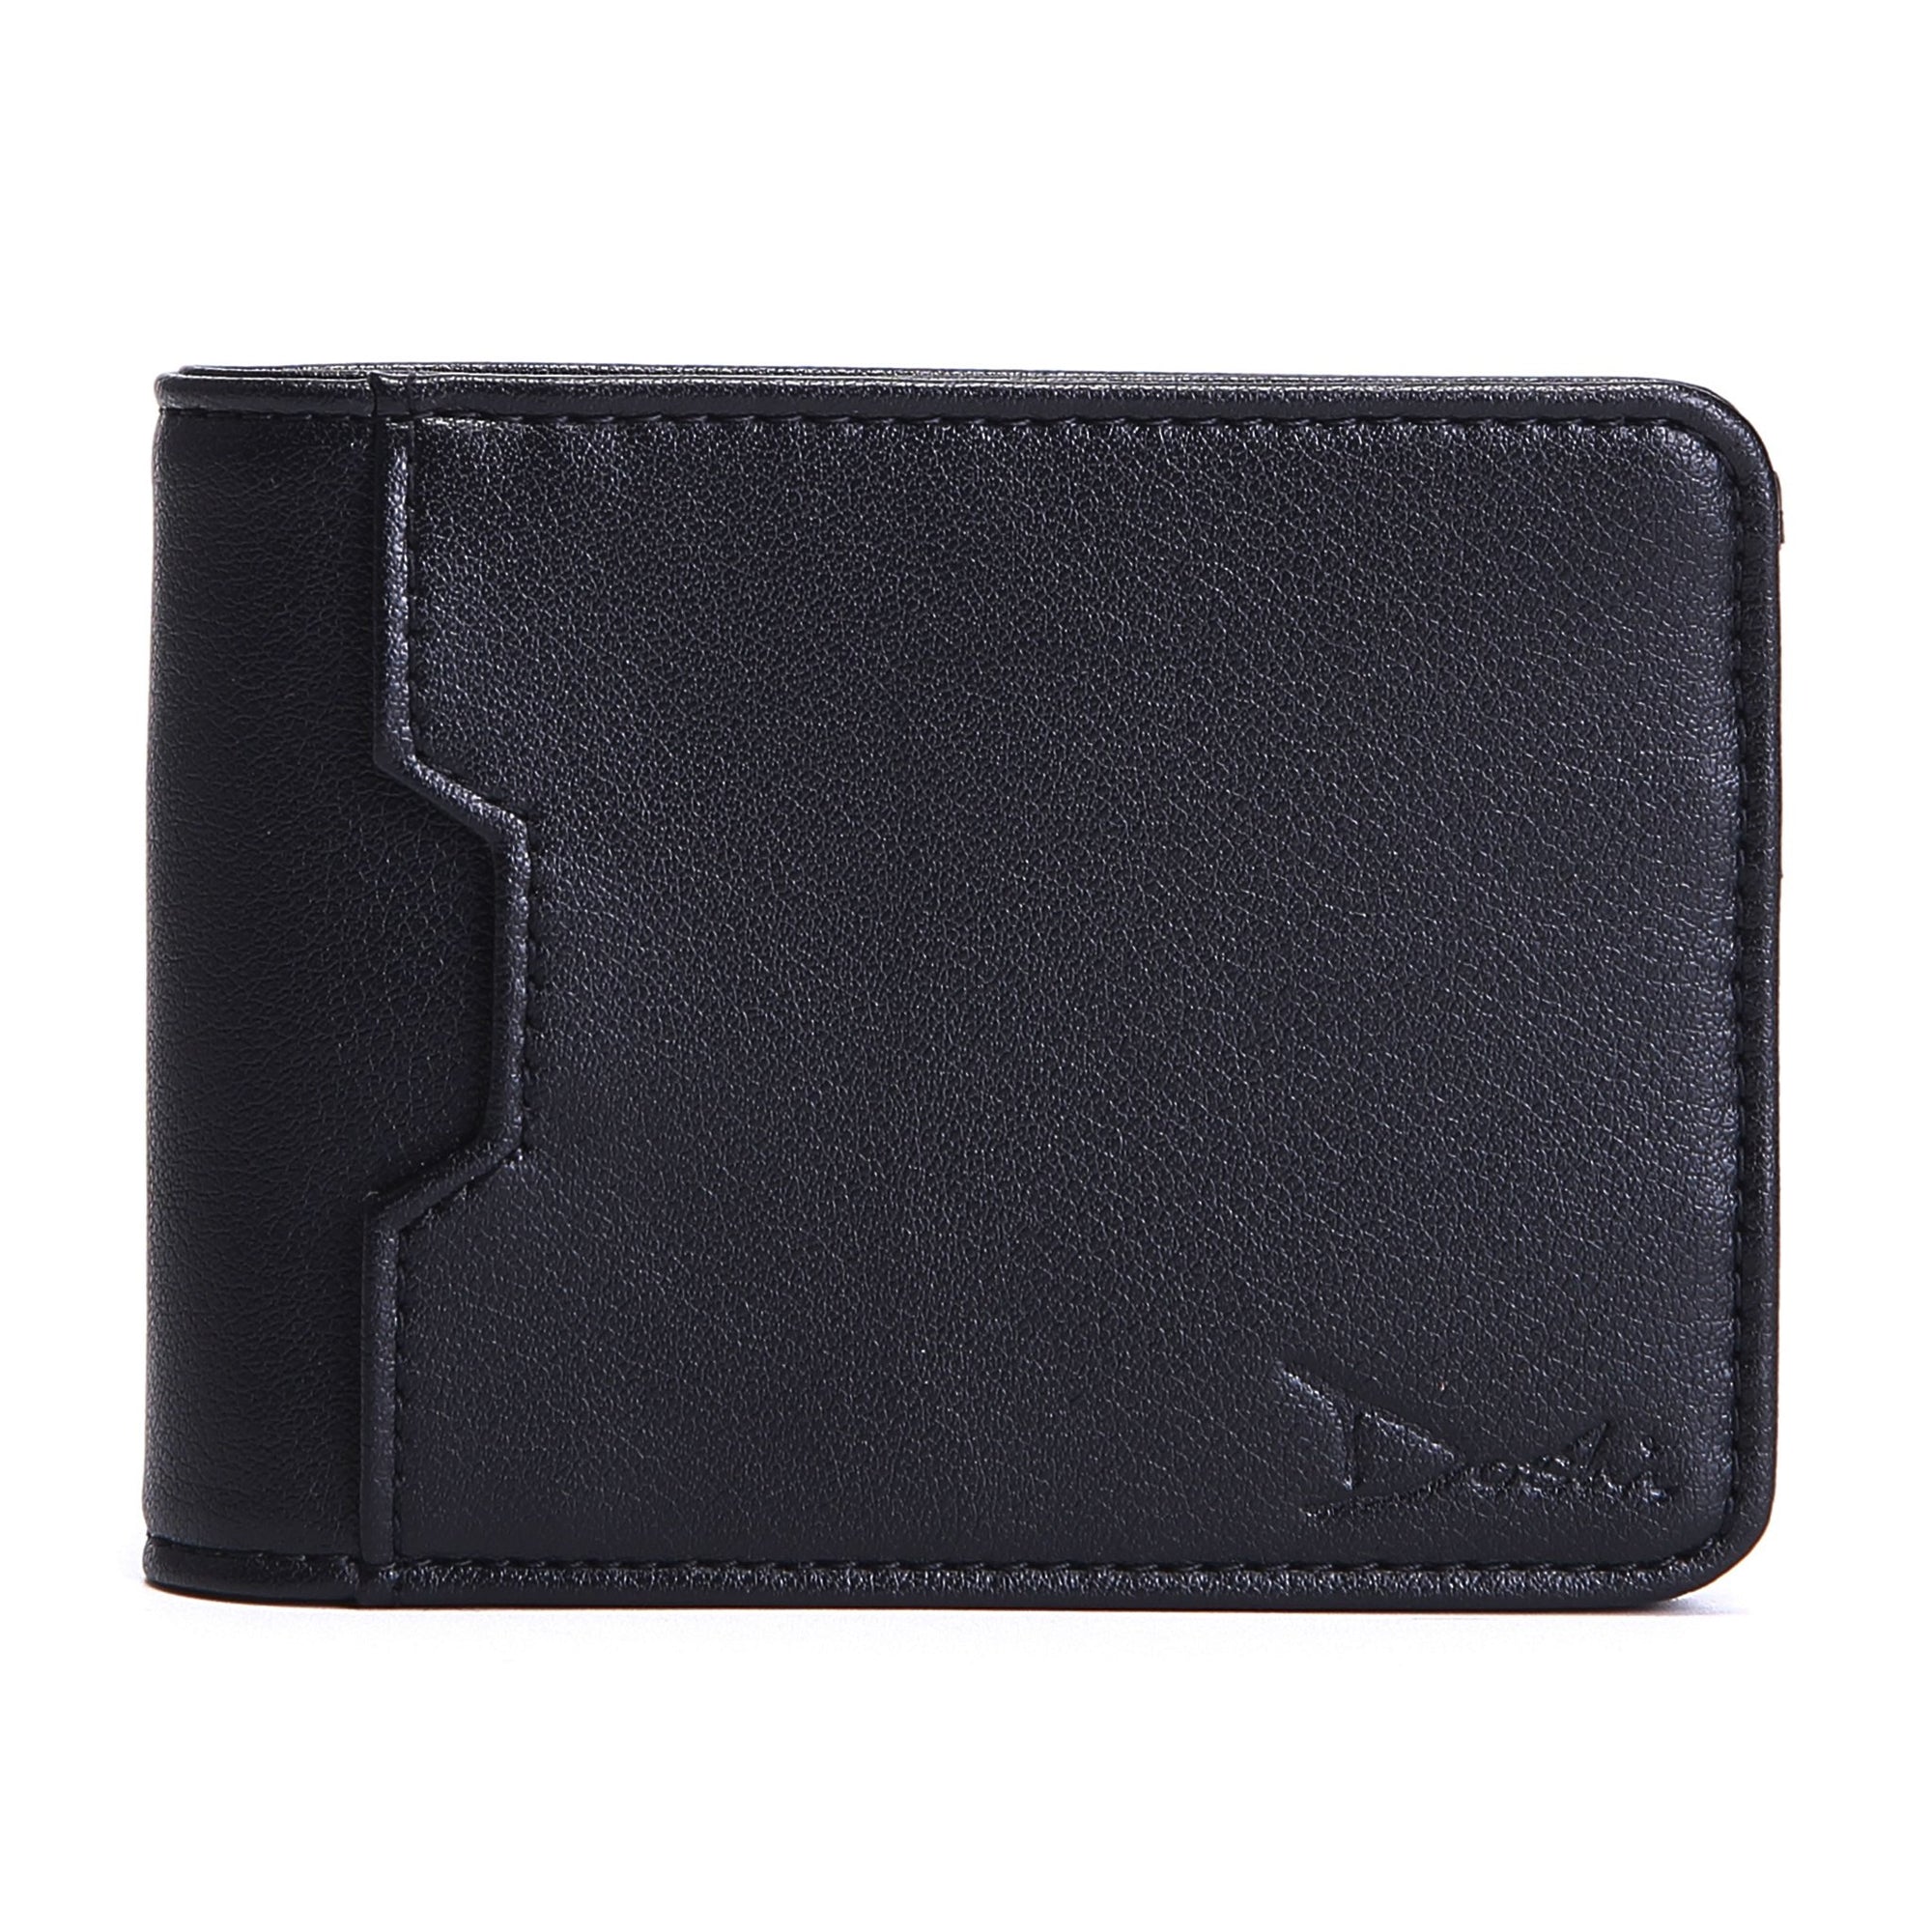 Original Branded Leather Wallet for Men Best Bifold Multi-card with coin  pocket